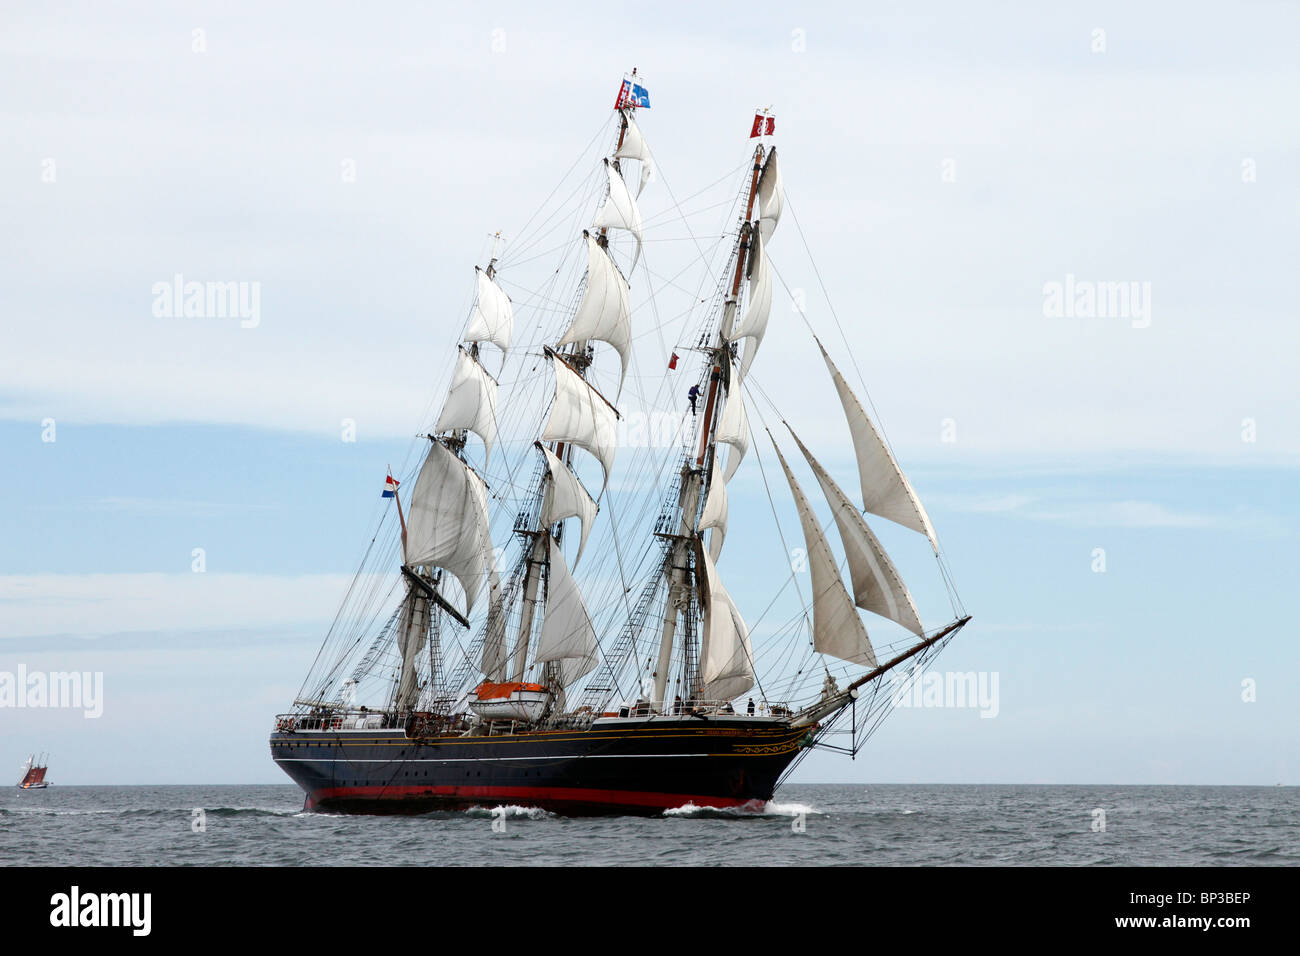 Clipper Stad Amsterdam - Sailing Cruises and Adventurous Sailing